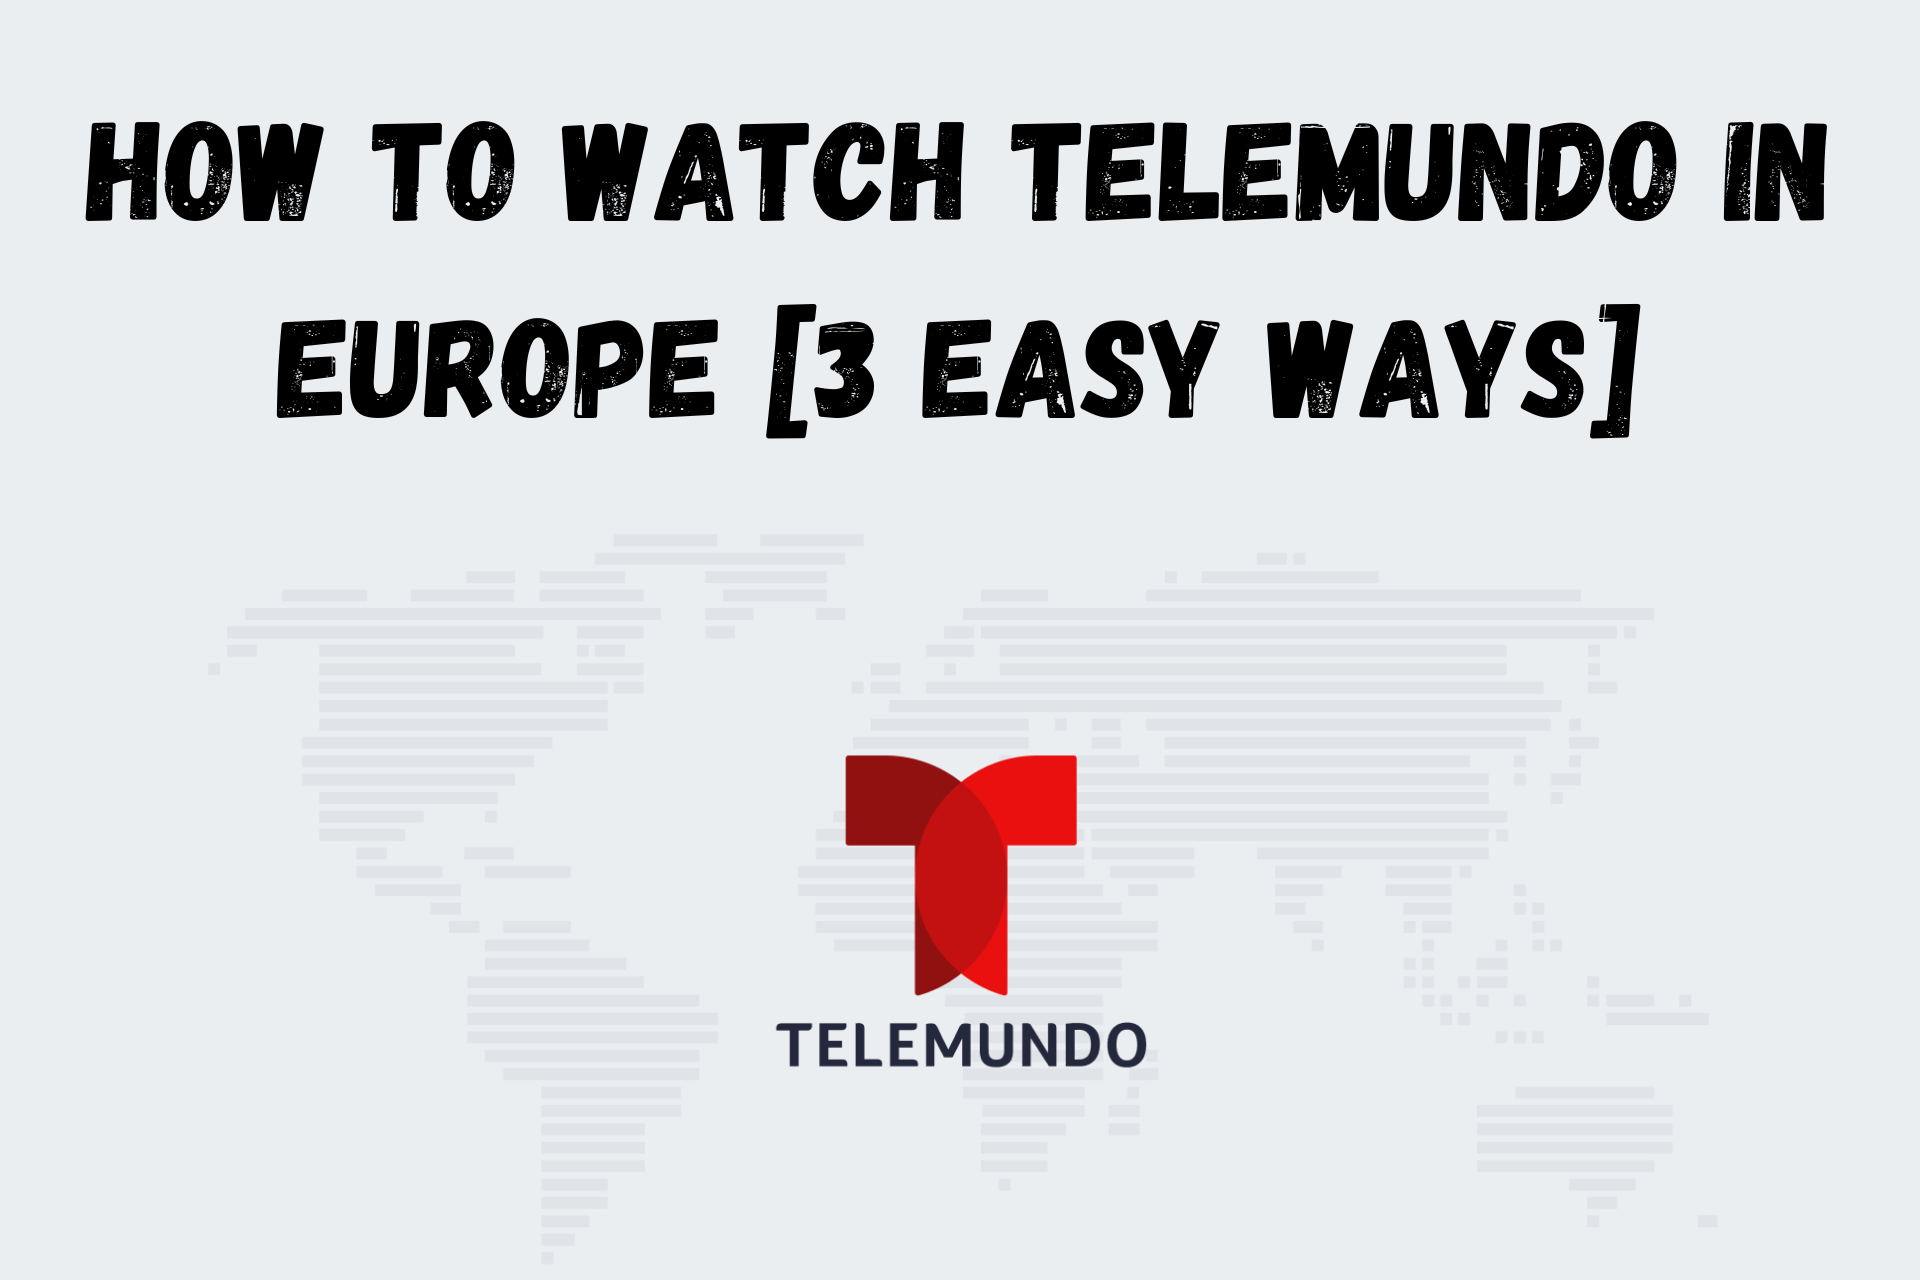 How to watch Telemundo in Europe